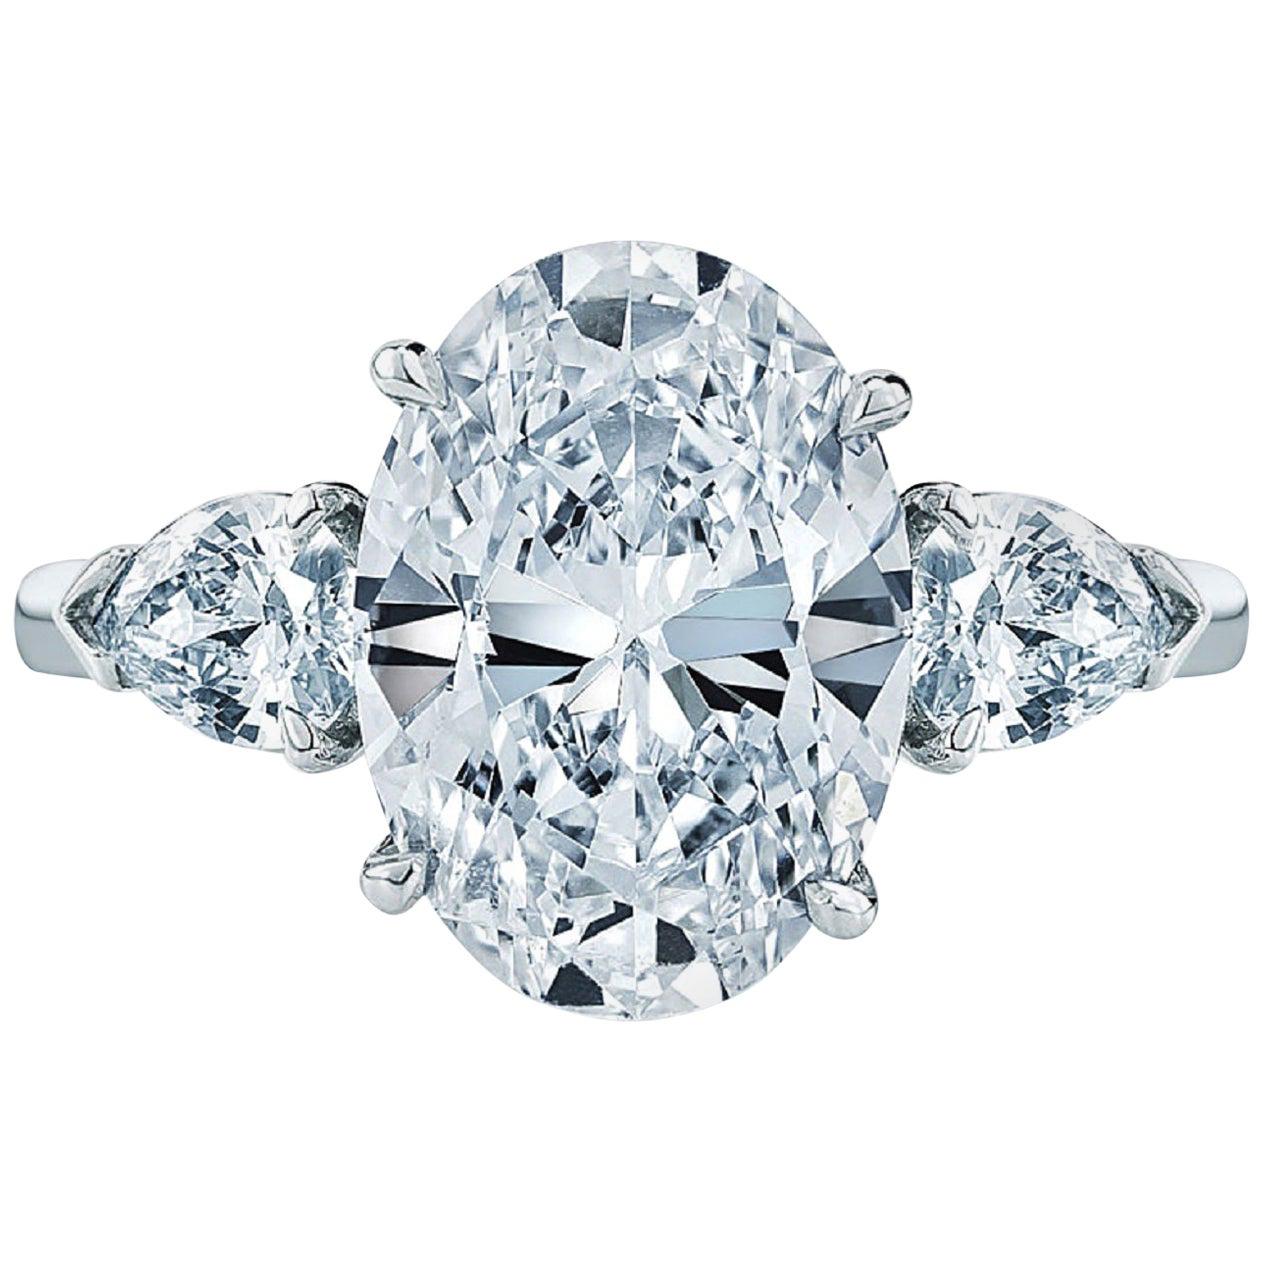 GIA Certified 4.15 Carat 'main stone' Oval Cut Diamond Ring